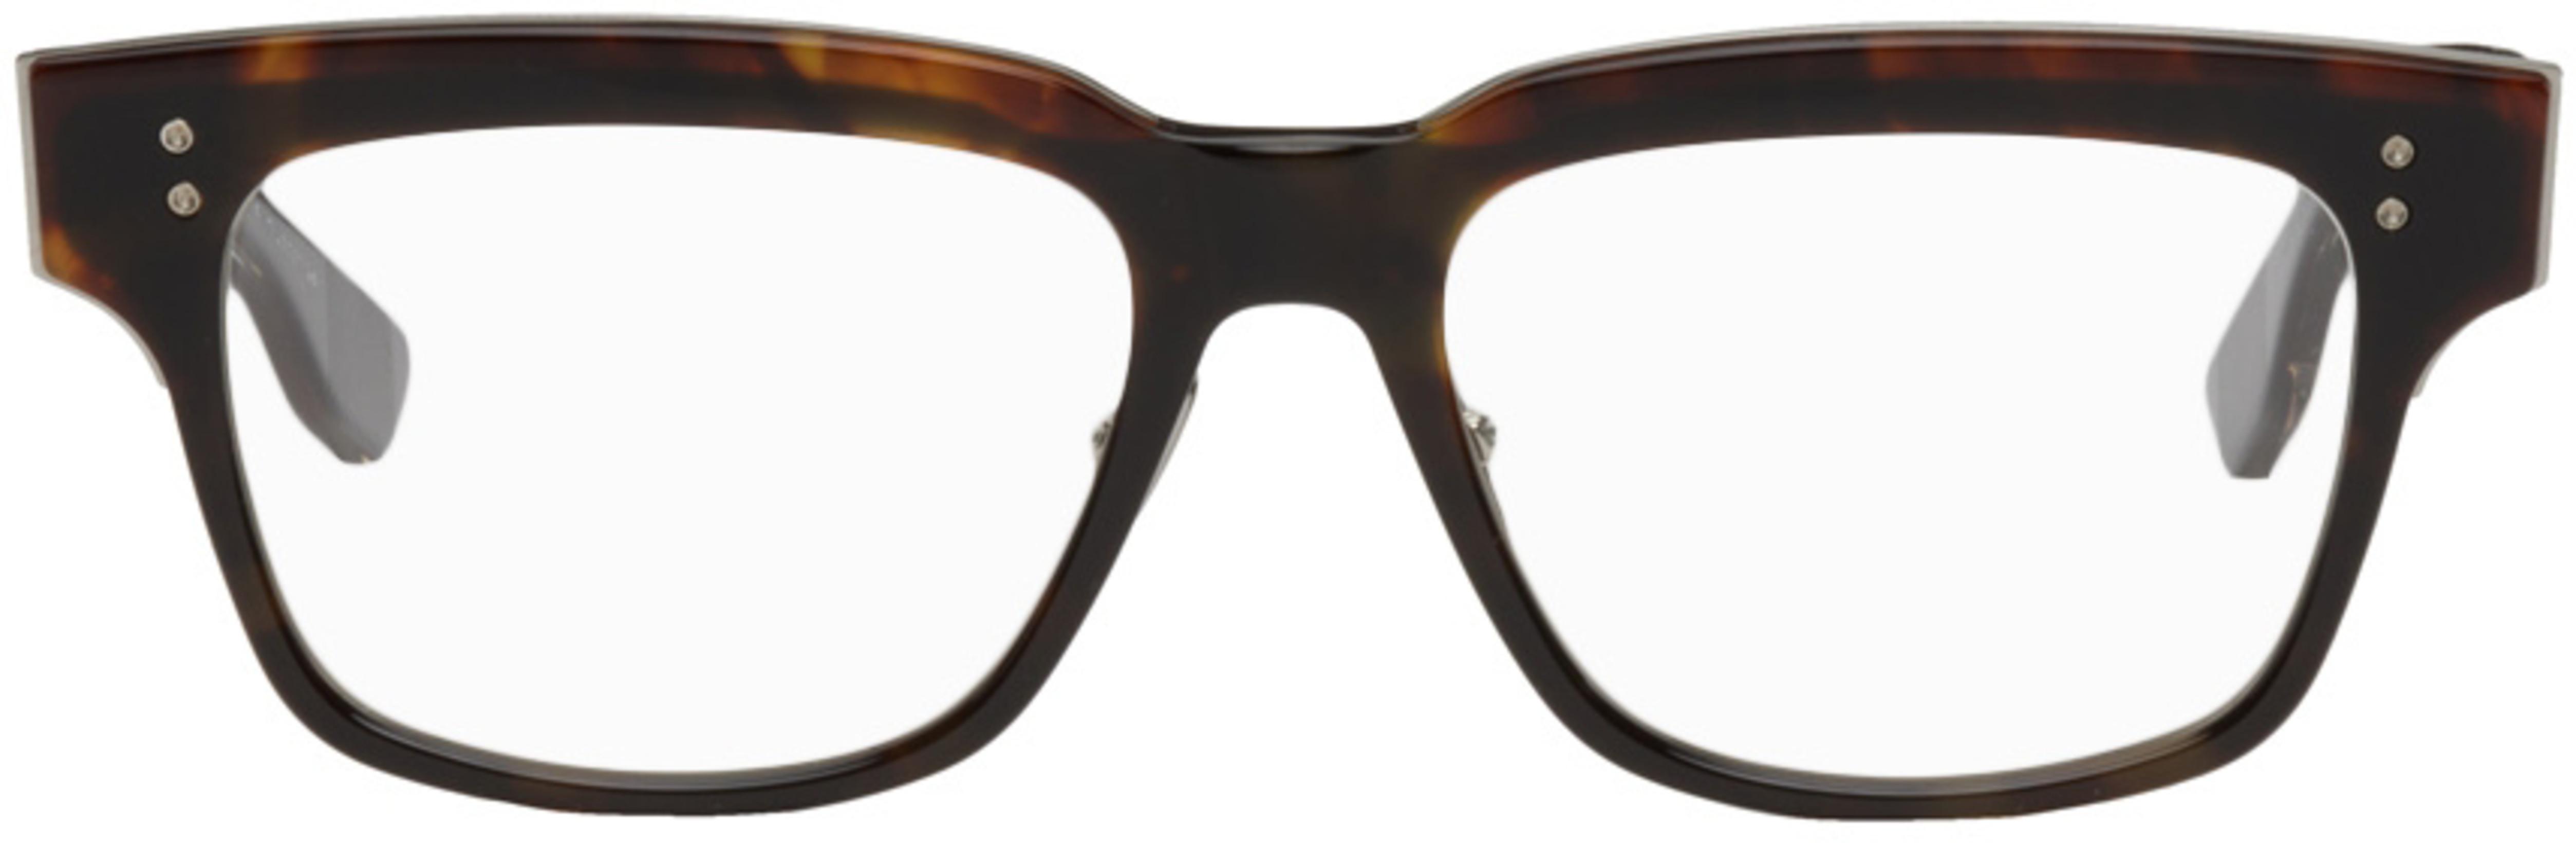 Tortoiseshell Auder Glasses by DITA